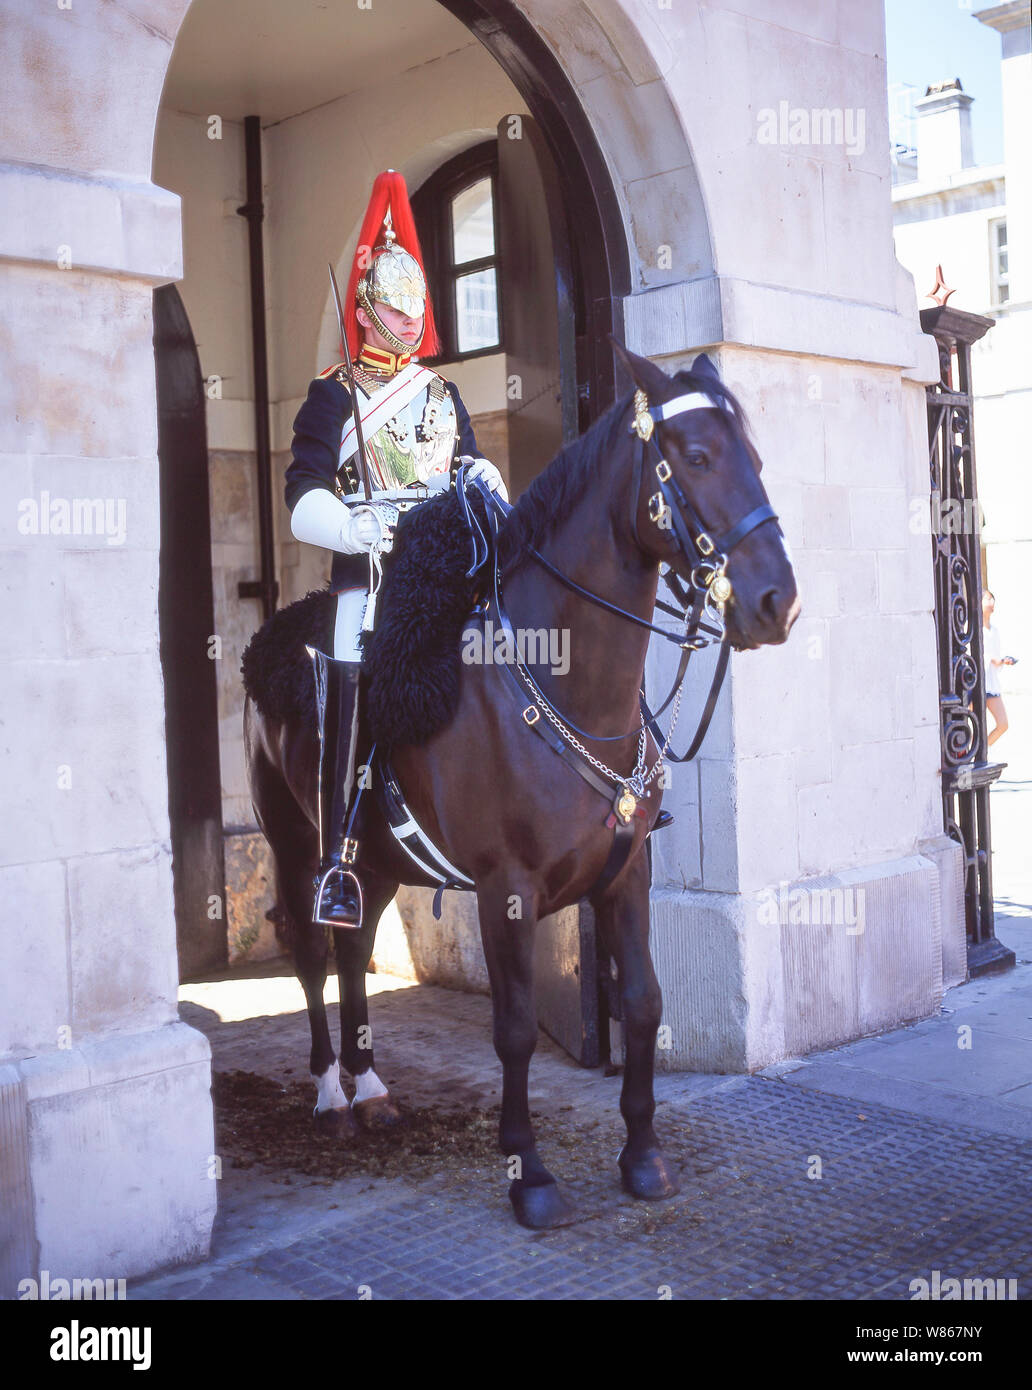 Cavalo Real não aguenta. #Guardareal #RoyalGuard #GuardiaReal